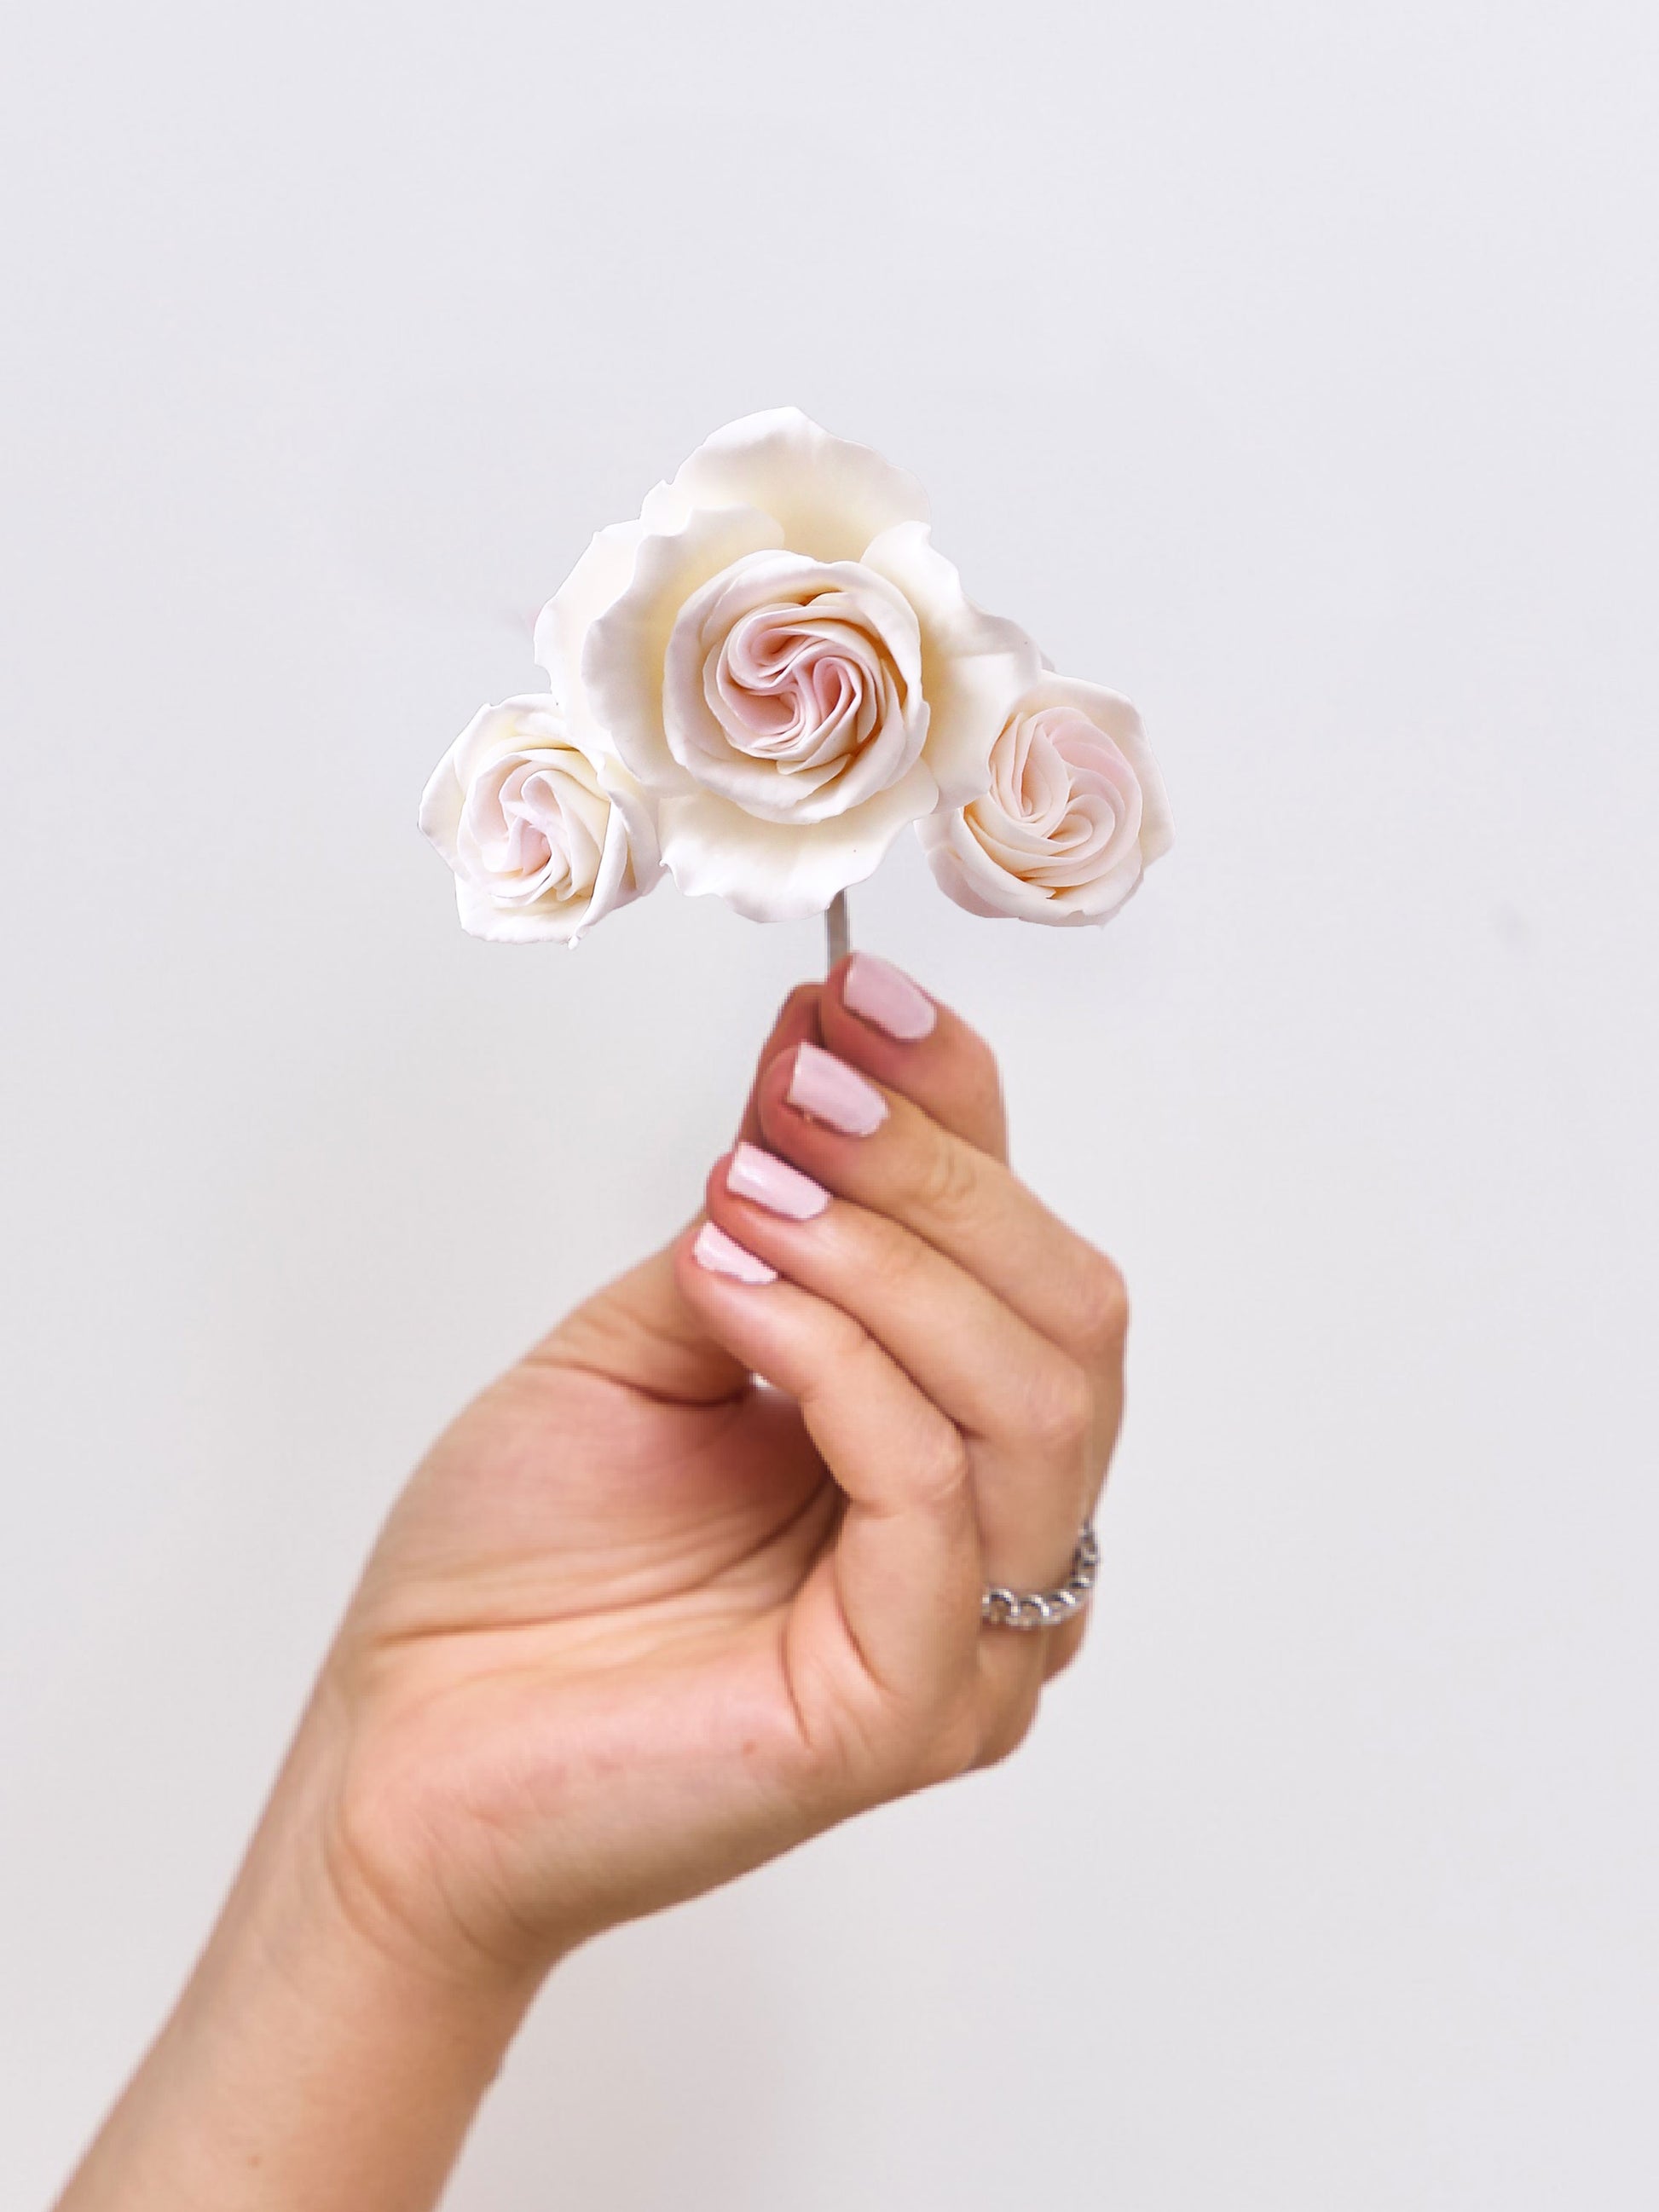 White Rose Sugar Flower with Blush Pink Center